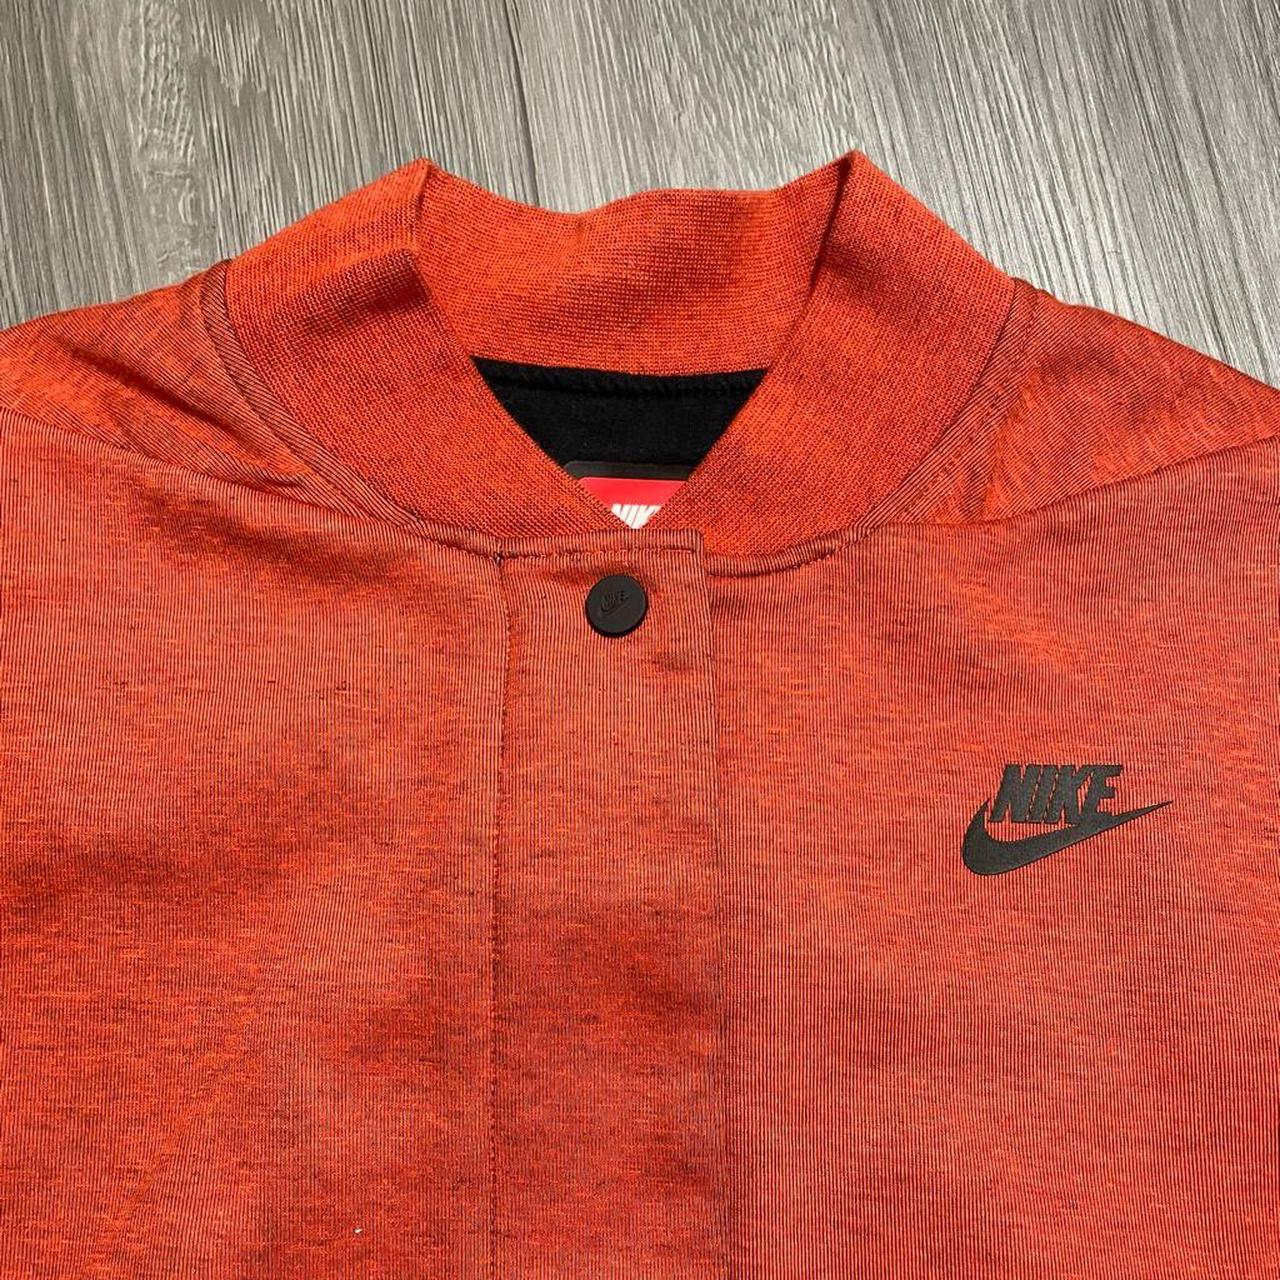 Nike Women's Orange and Red Jacket (2)